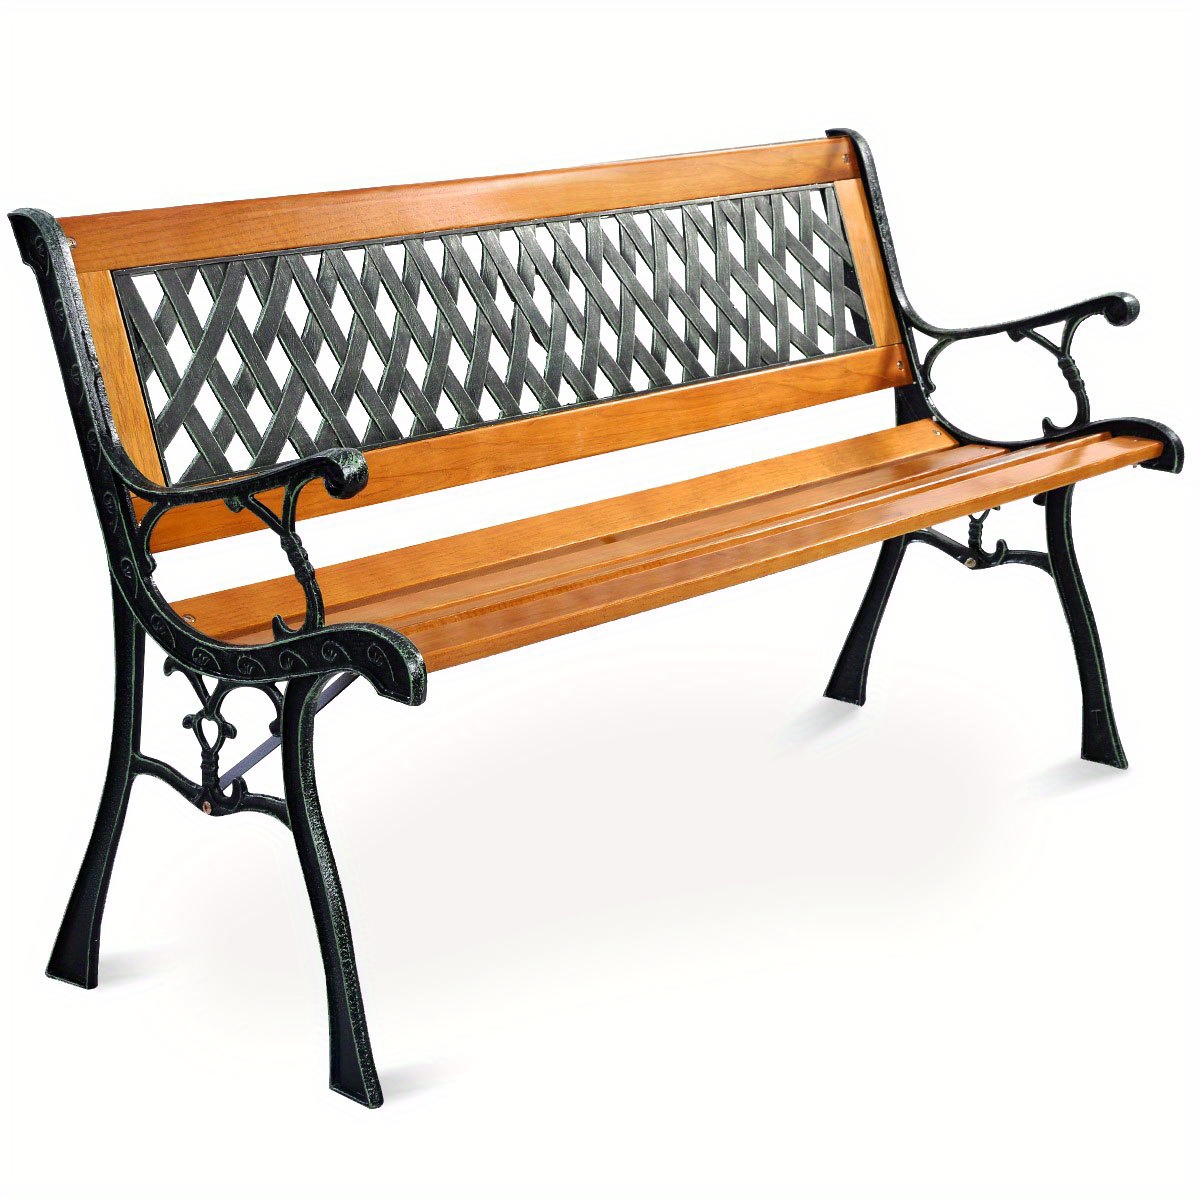 

Homasis 49 1/2" Garden Bench Porch Path Chair Outdoor Deck Cast Iron Hardwood